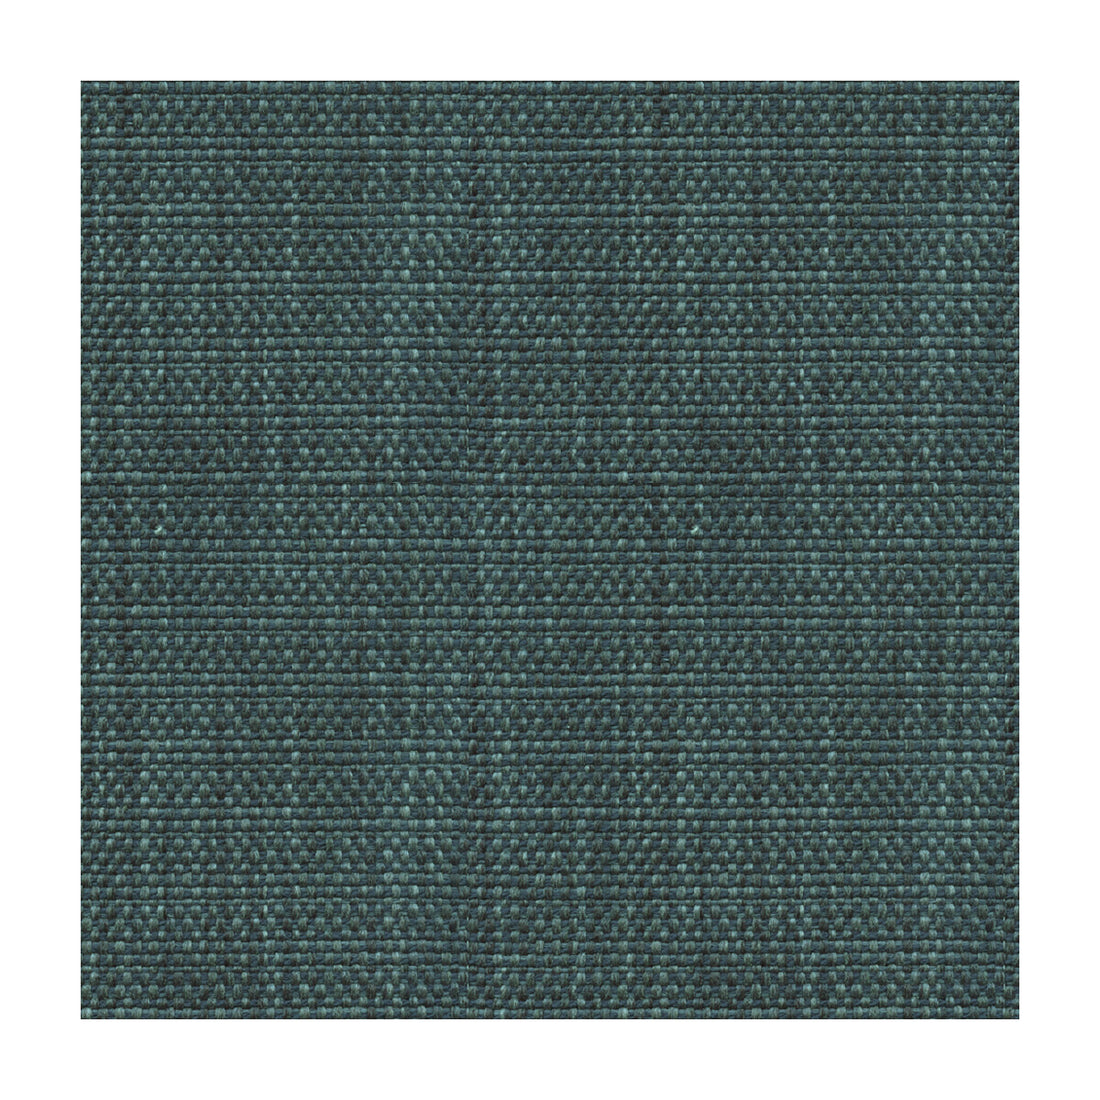 Kf Smt fabric - pattern 23846.515.0 - by Kravet Smart